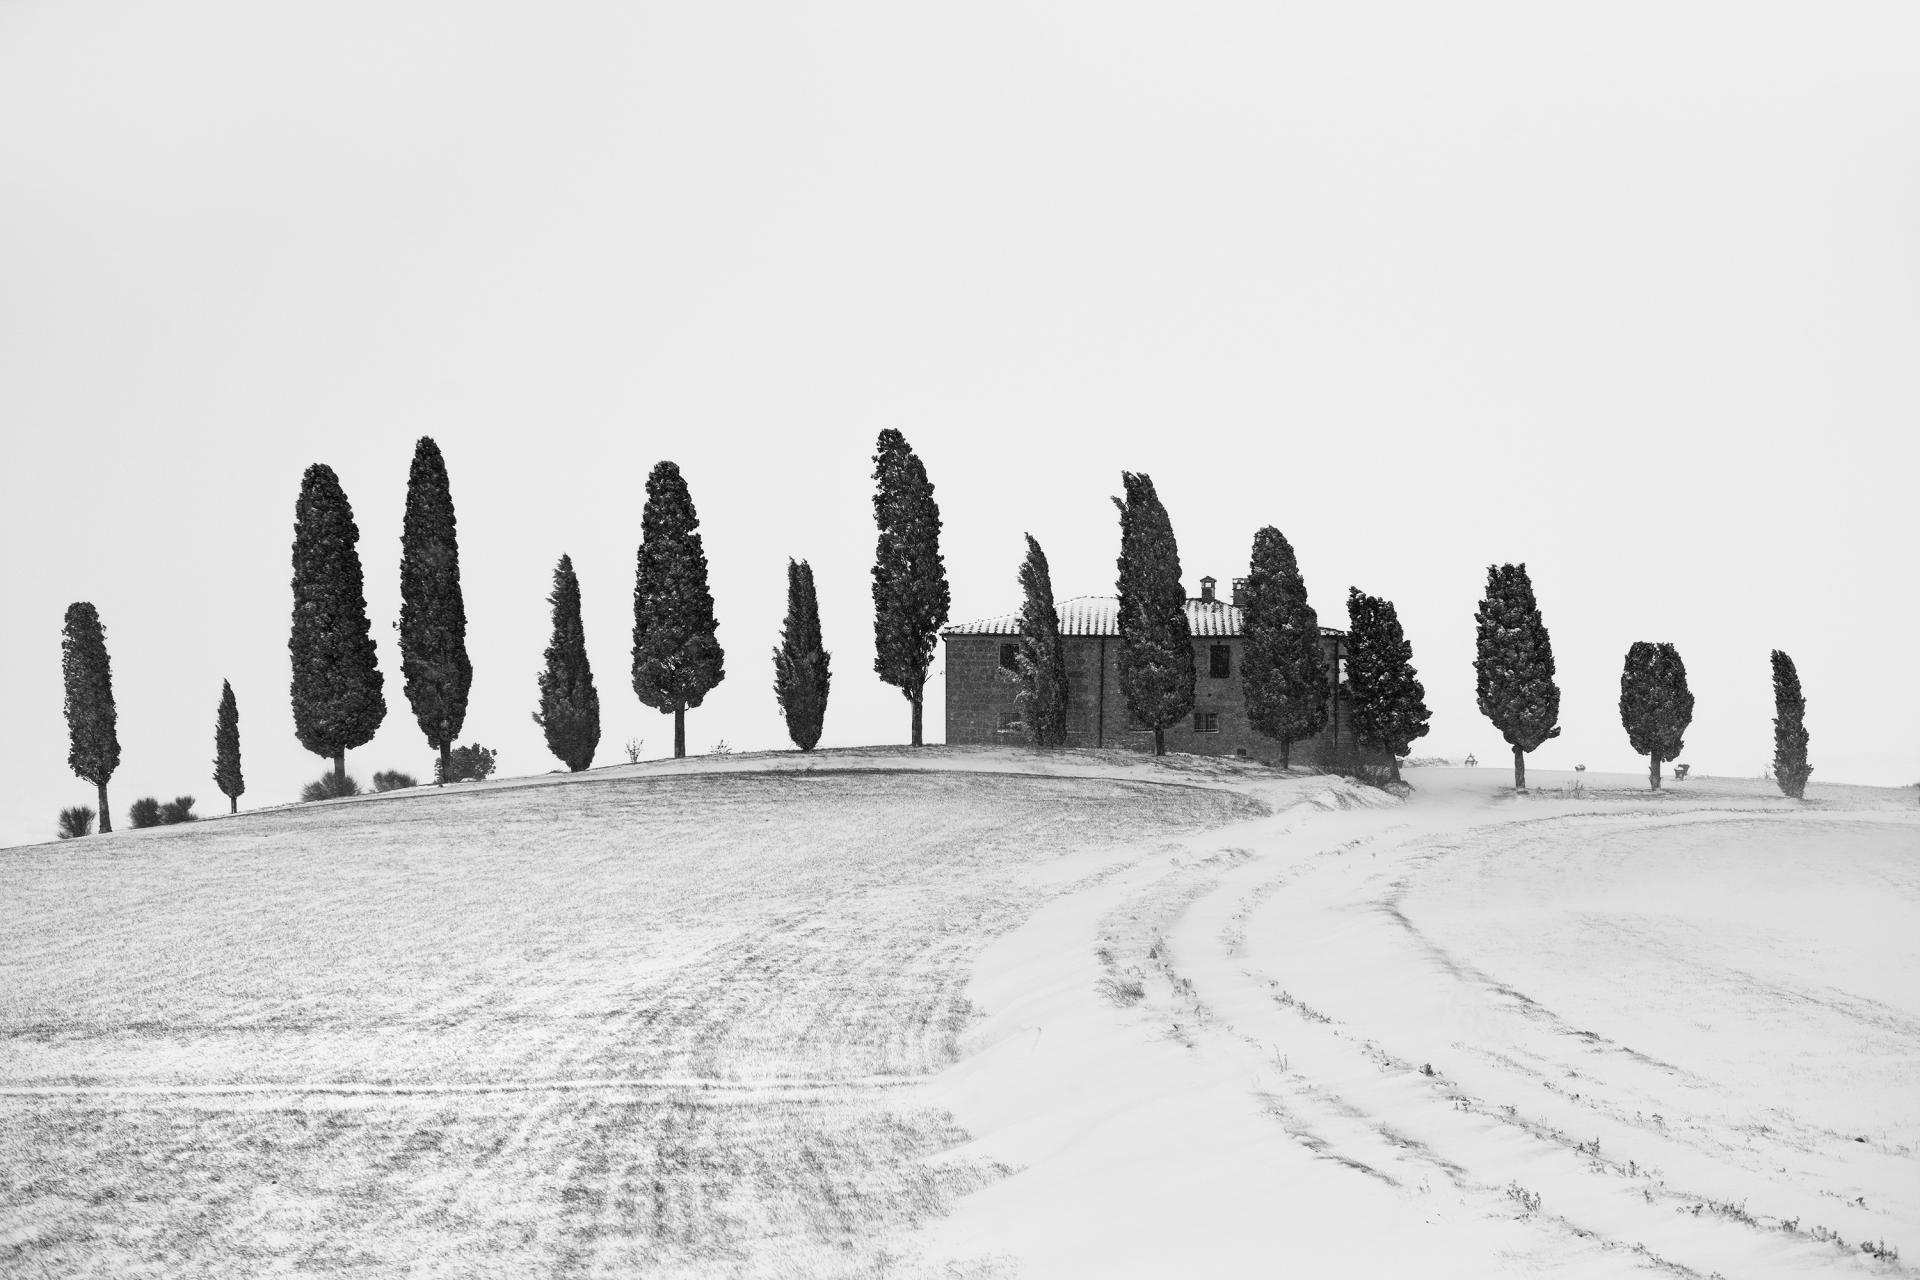 New York Photography Awards Winner - Snowfall in Tuscany